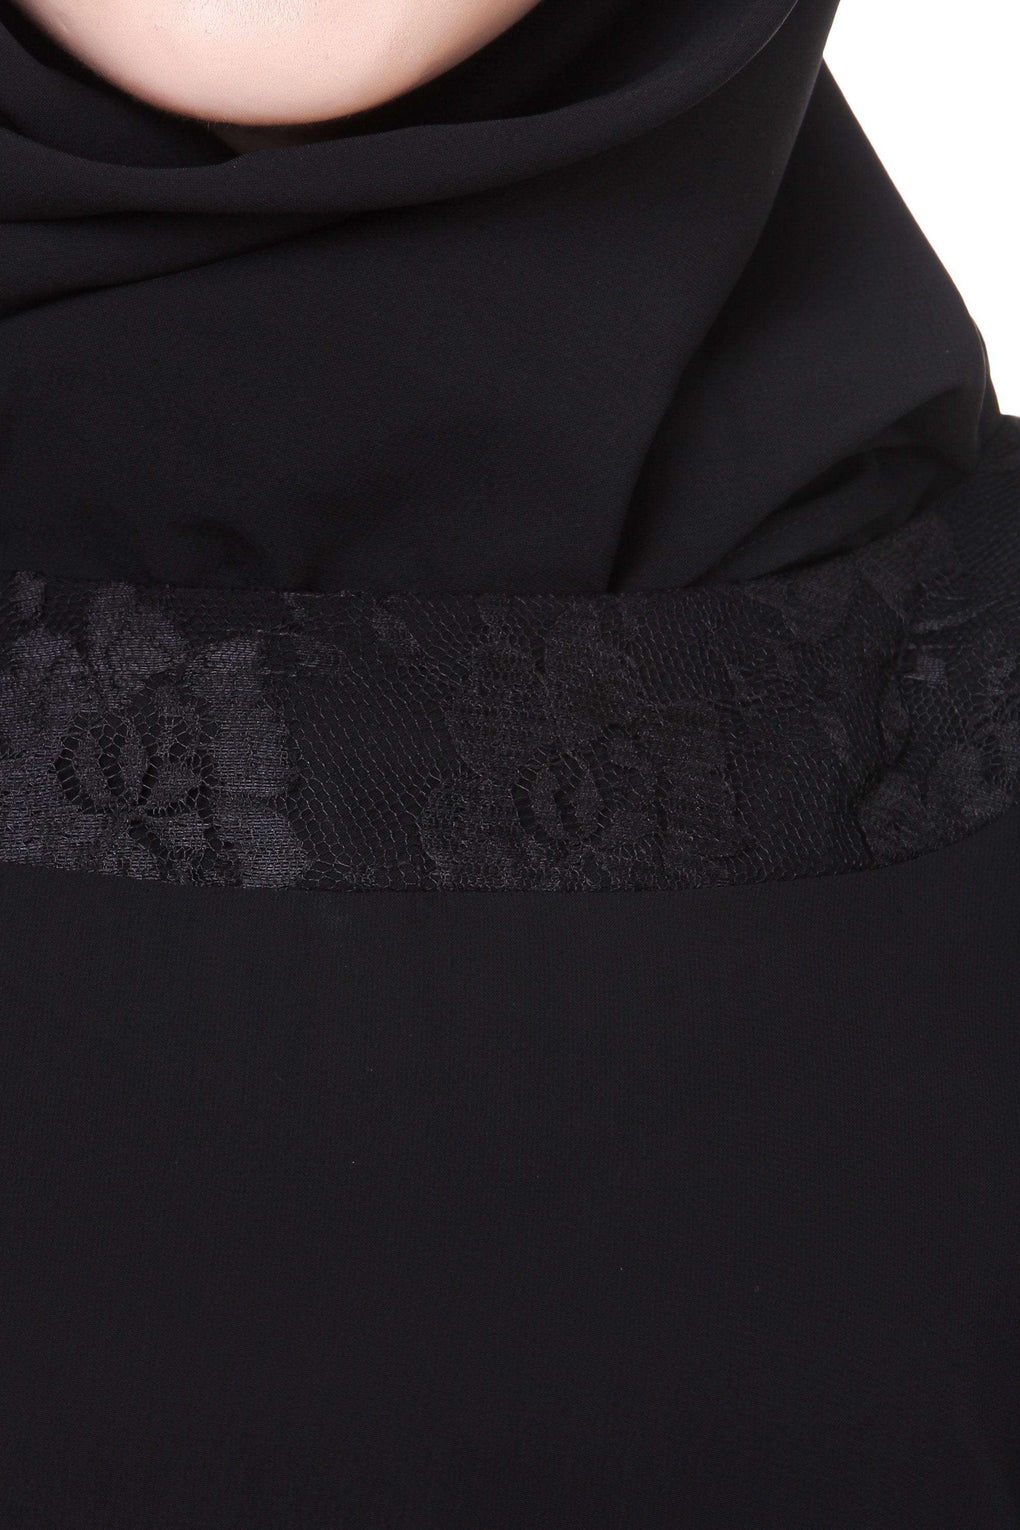 Black Nida Dubai Batwing Abaya Front Design